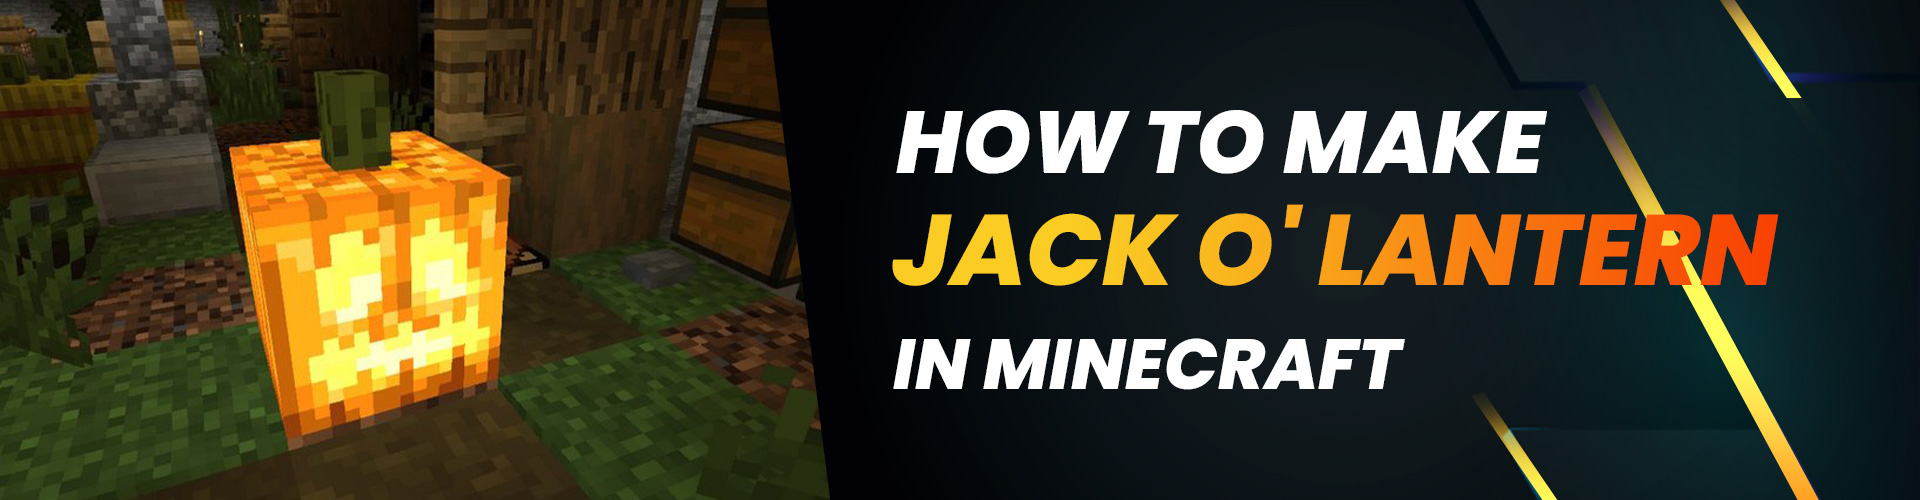 How to Make Jack O' Lantern in Minecraft